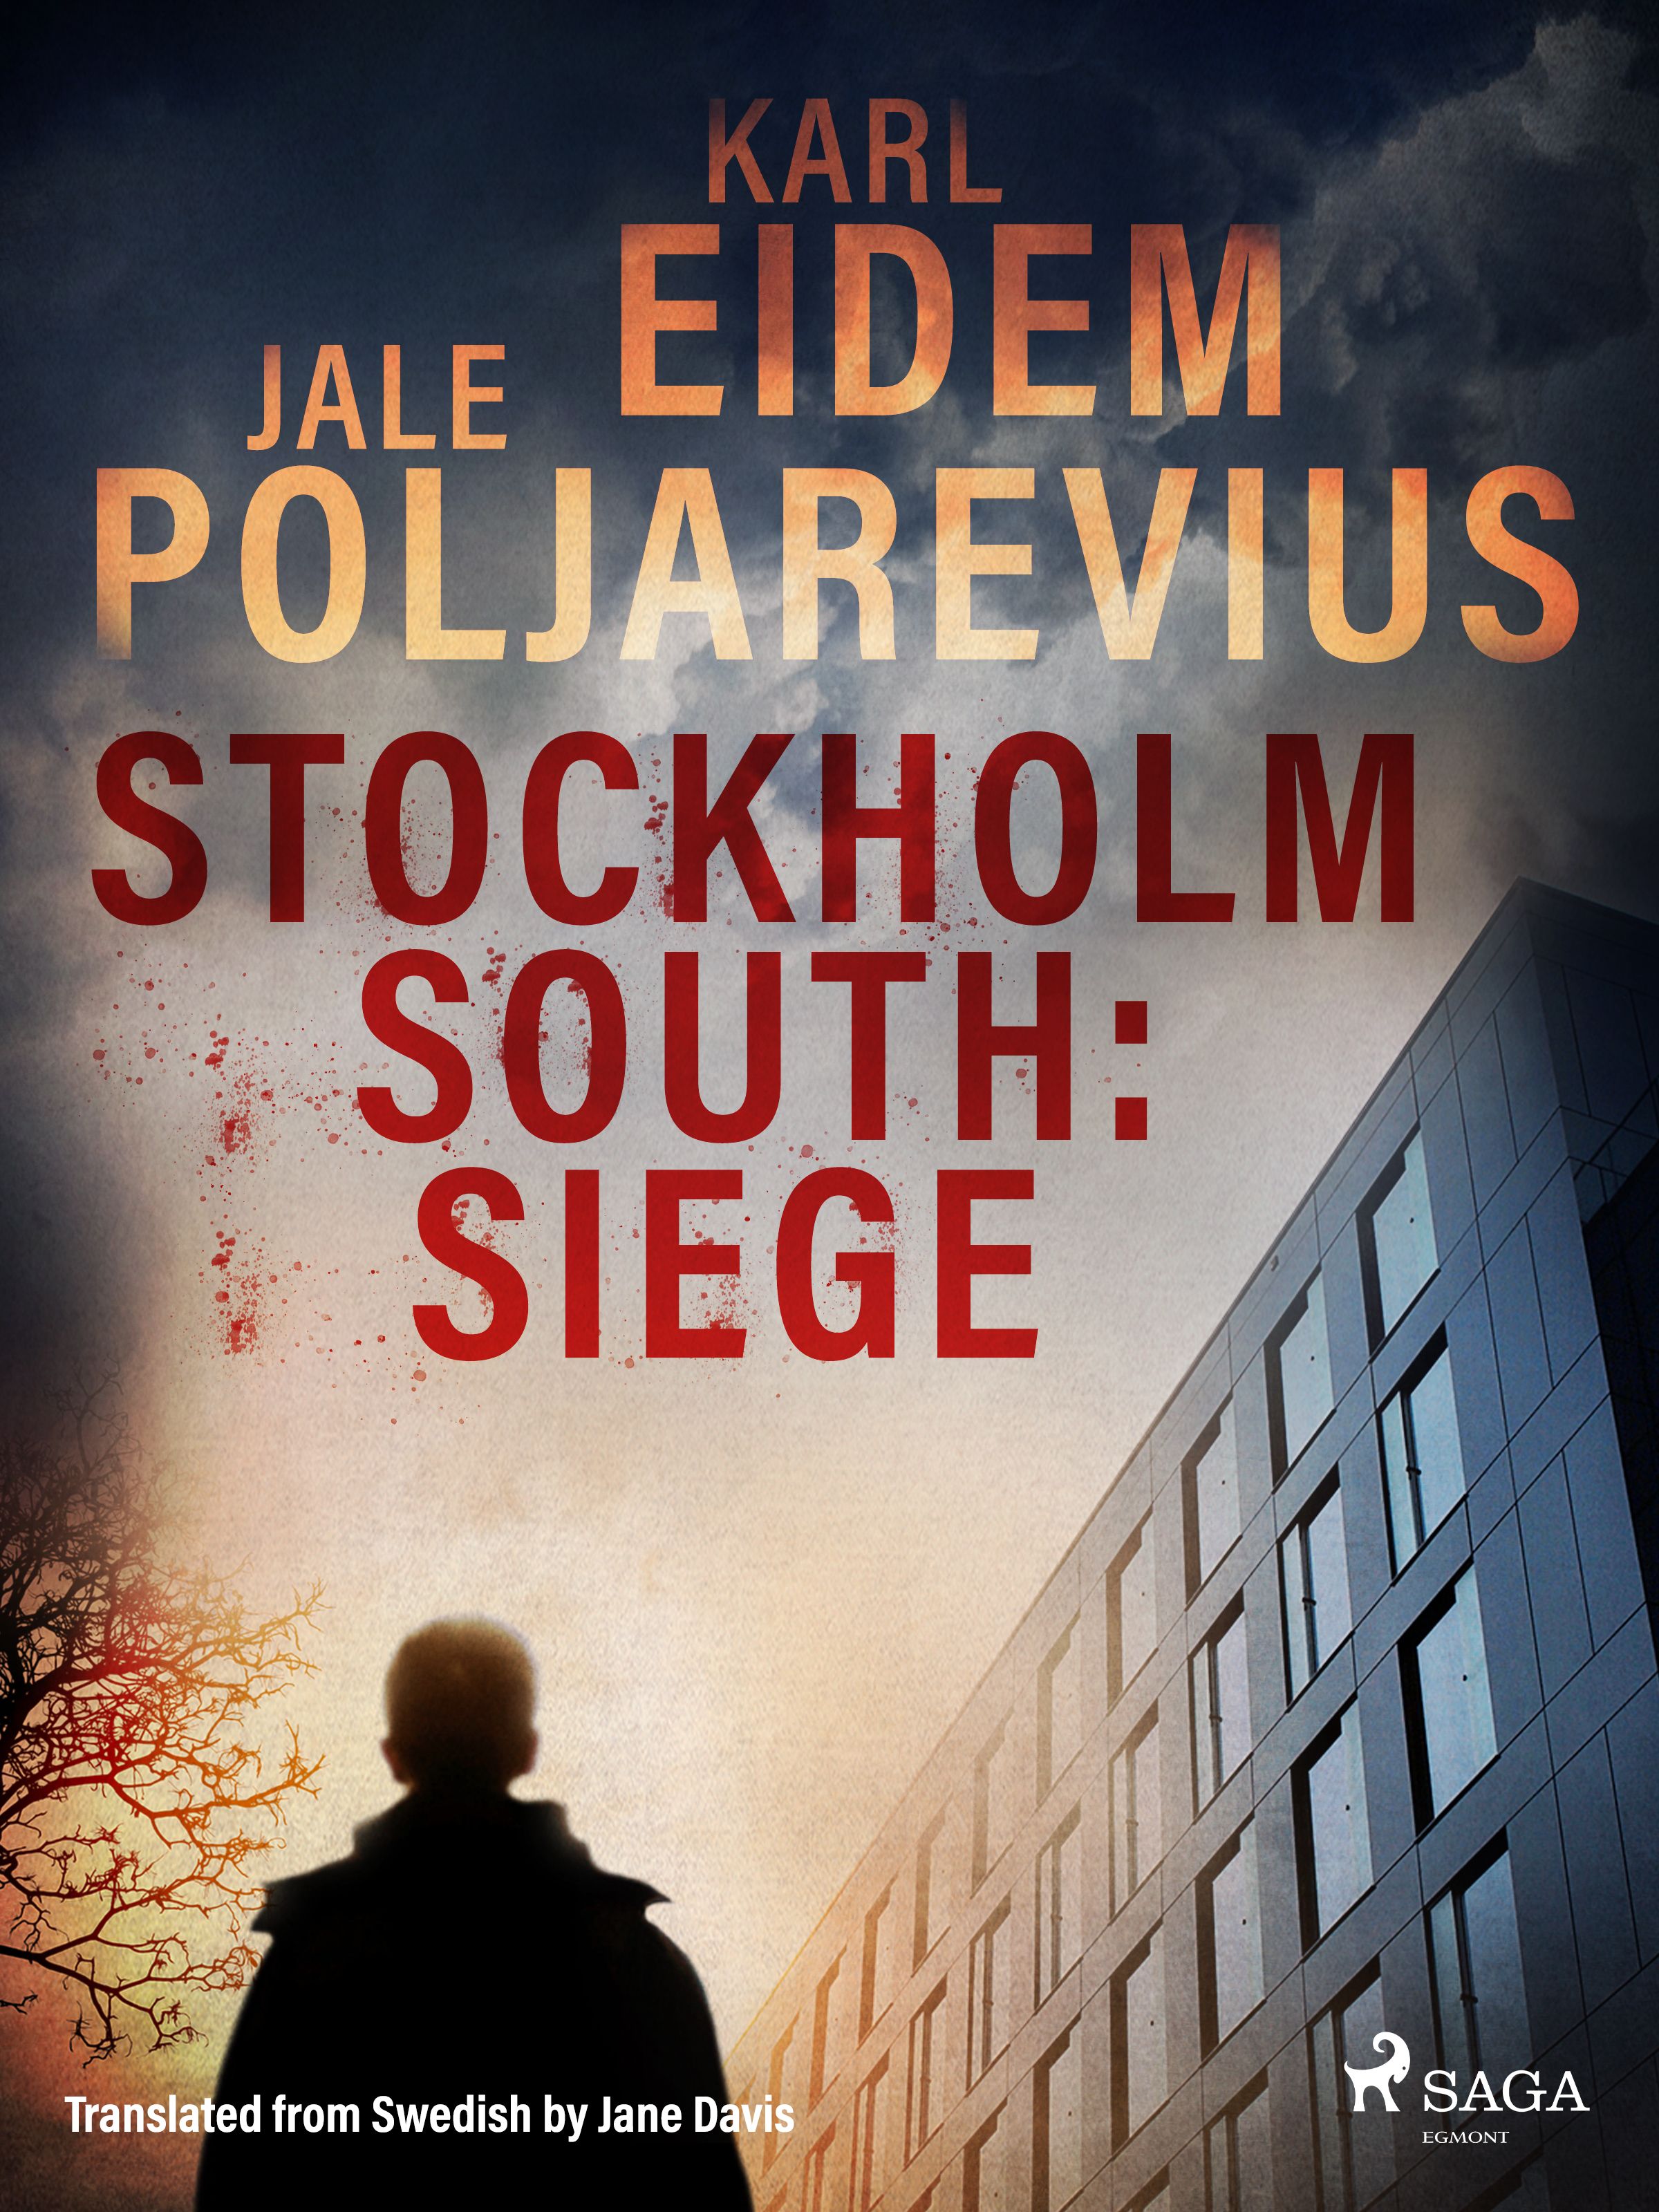 Stockholm South: Siege, eBook by Karl Eidem, Jale Poljarevius